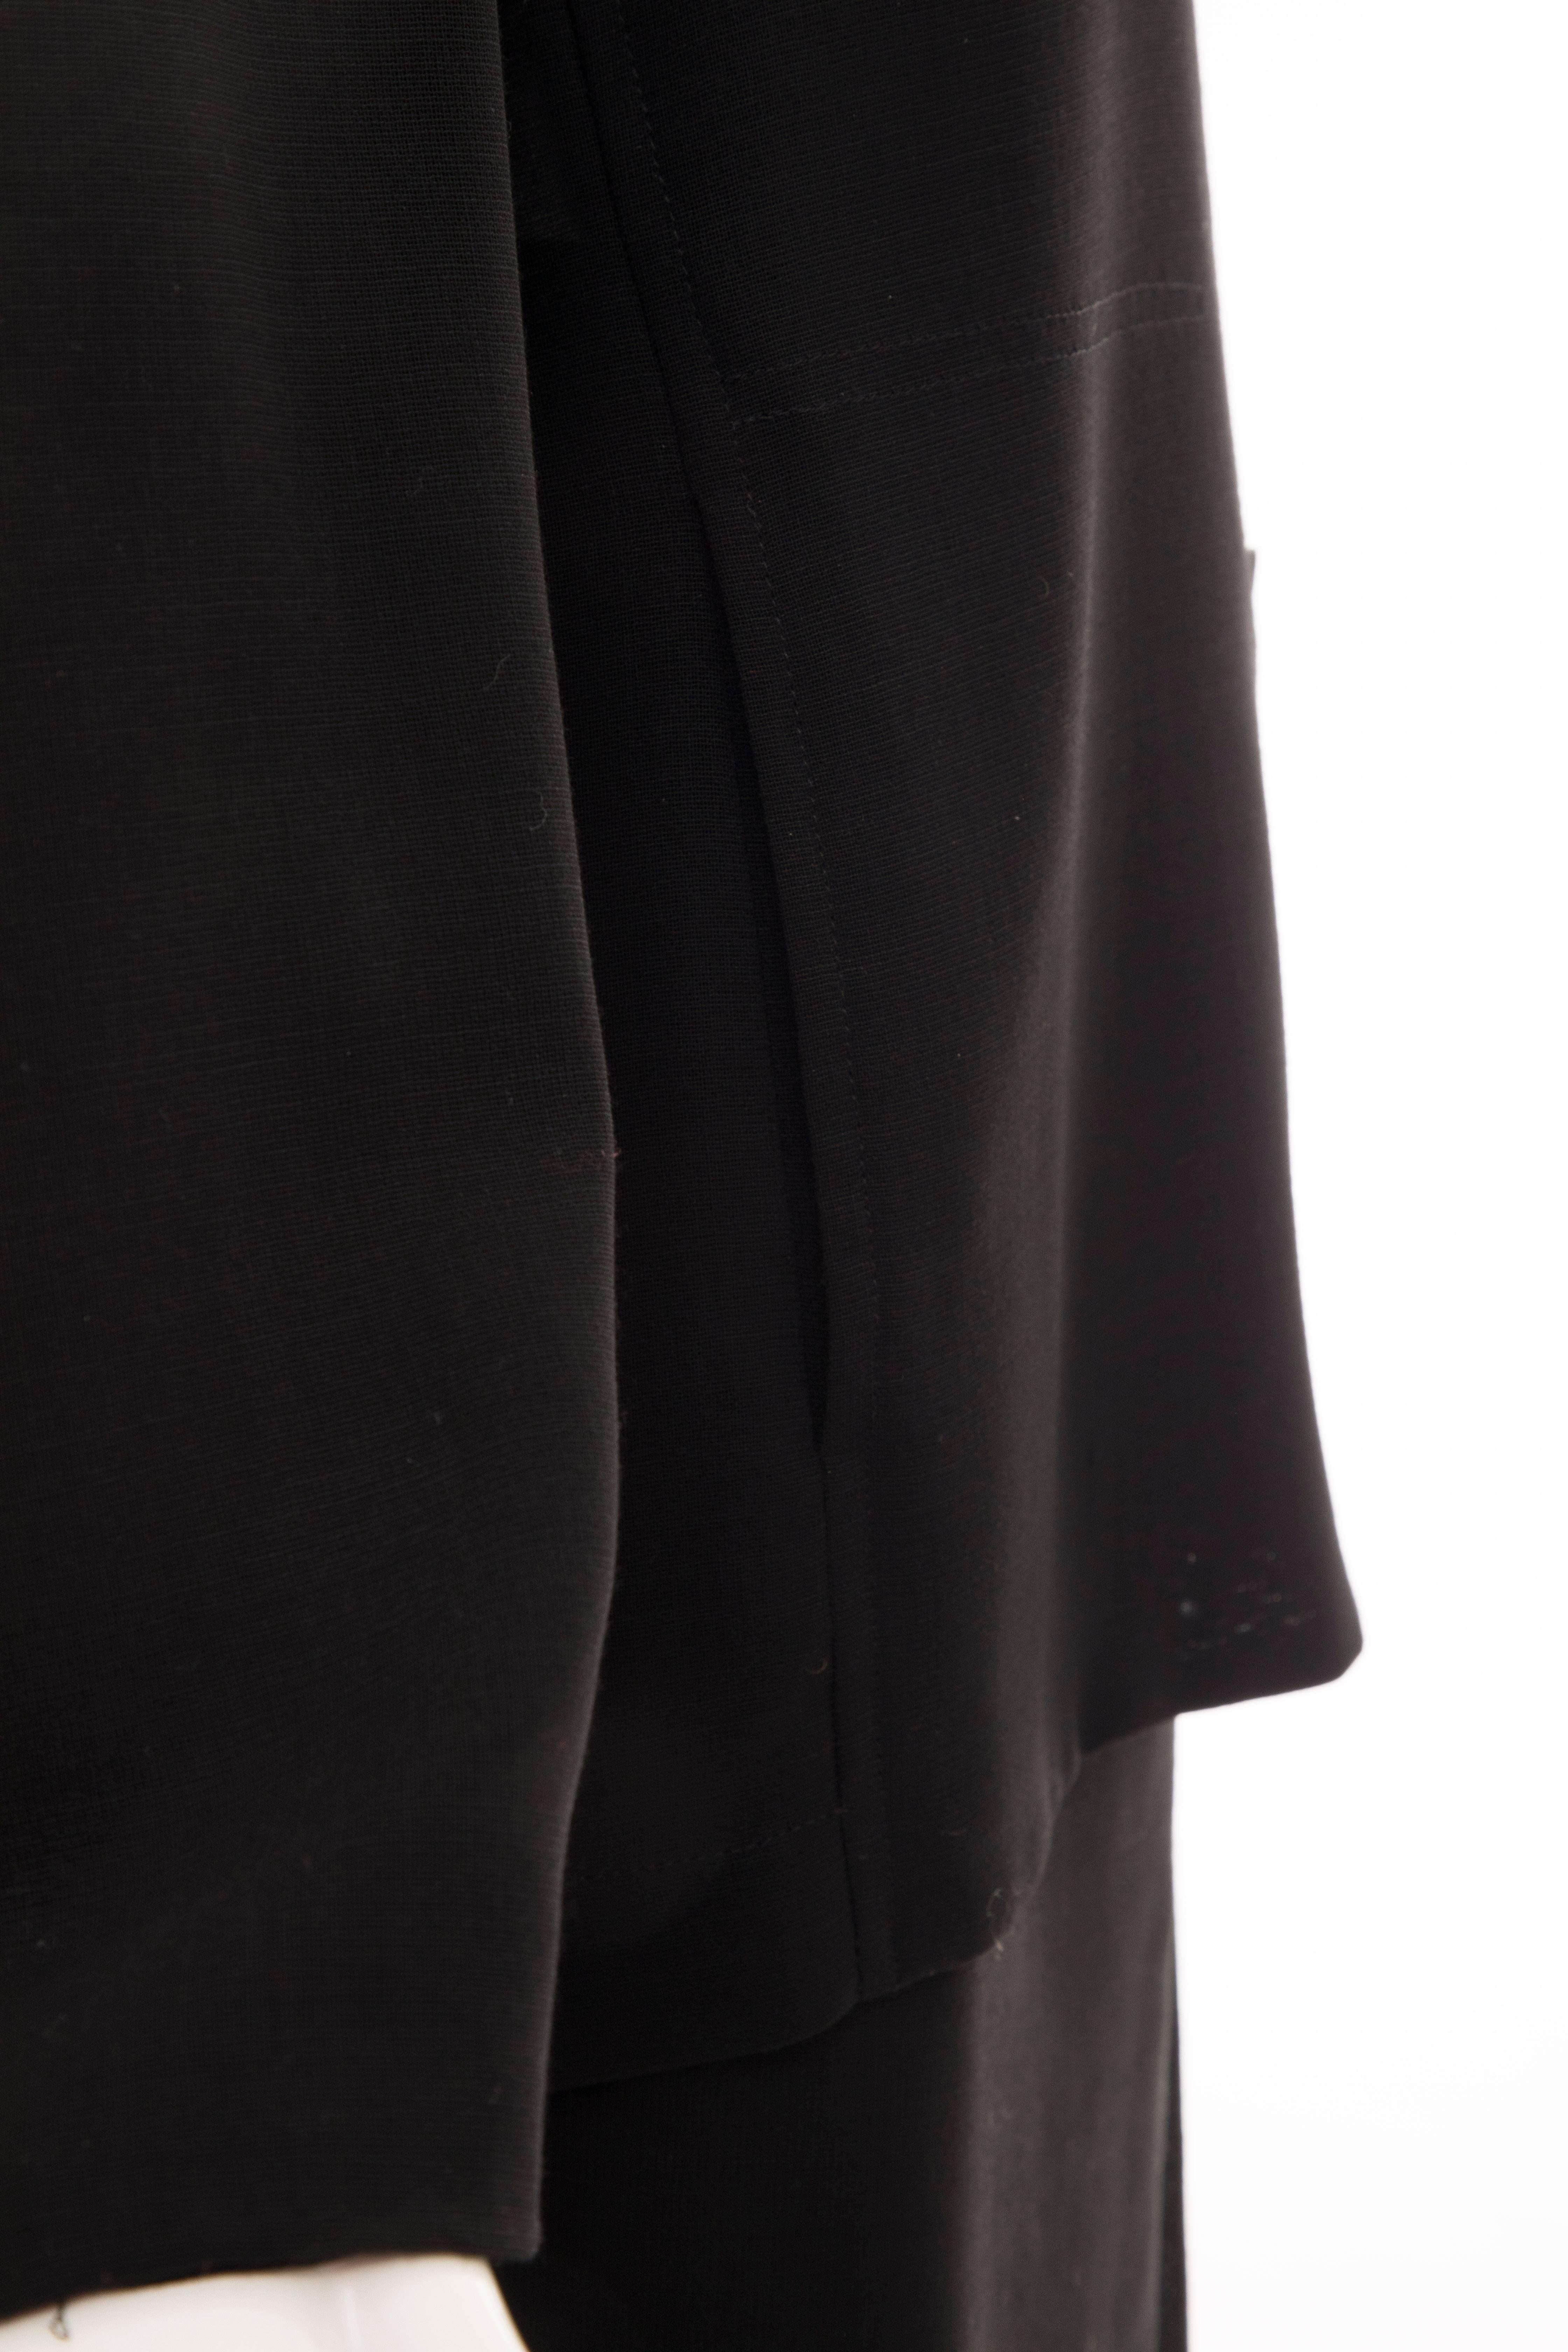 Cerruti 1881 Black Lightweight Wool Gauze Skirt-Suit, Circa 1990's For Sale 4